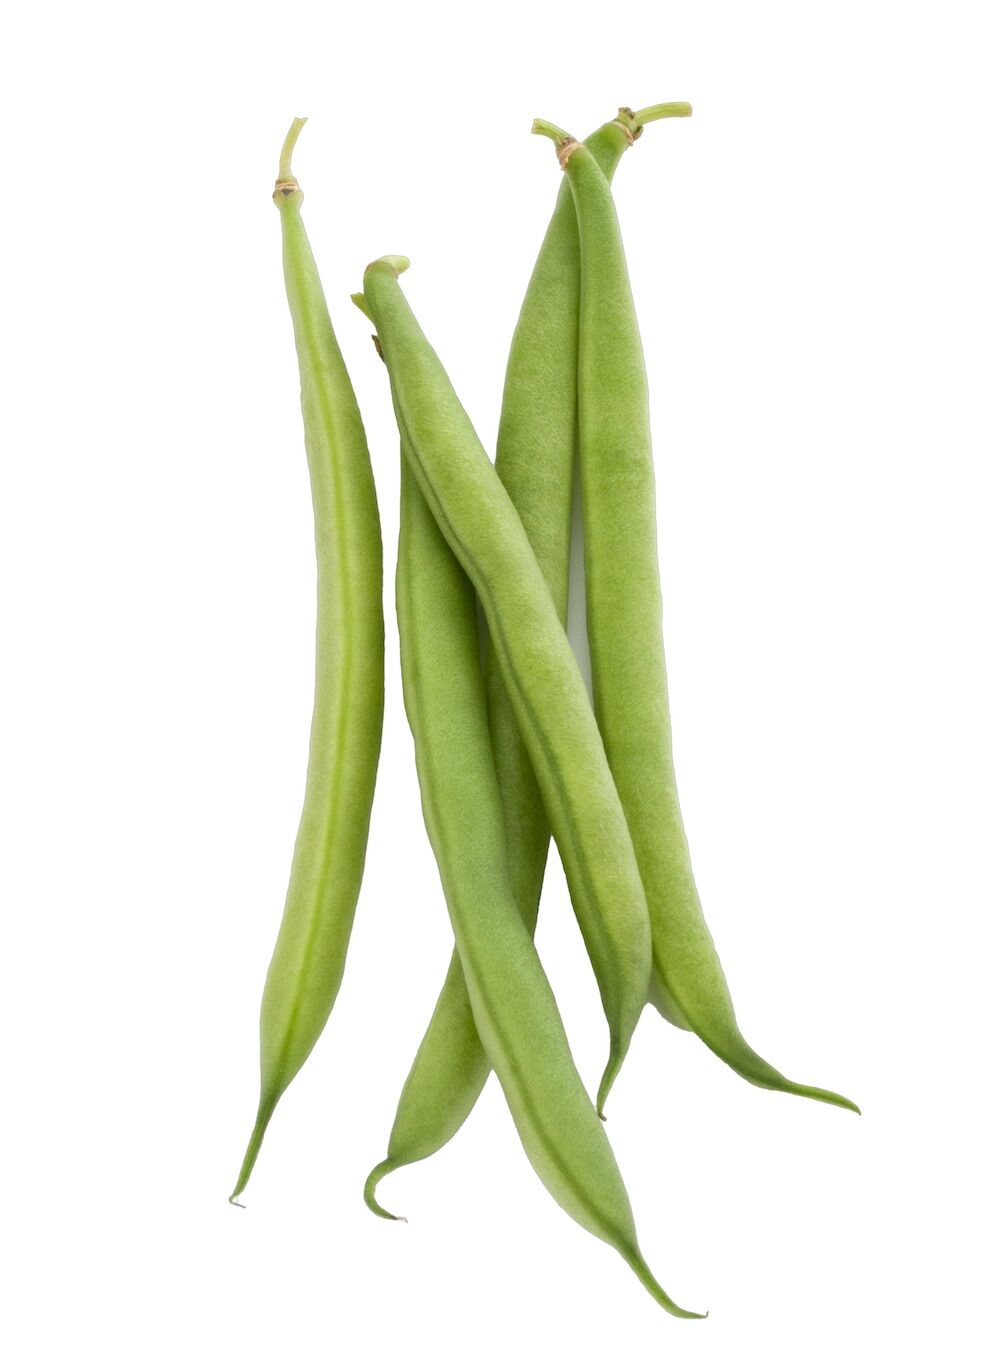 3 Veggies to Plant - Green Beans